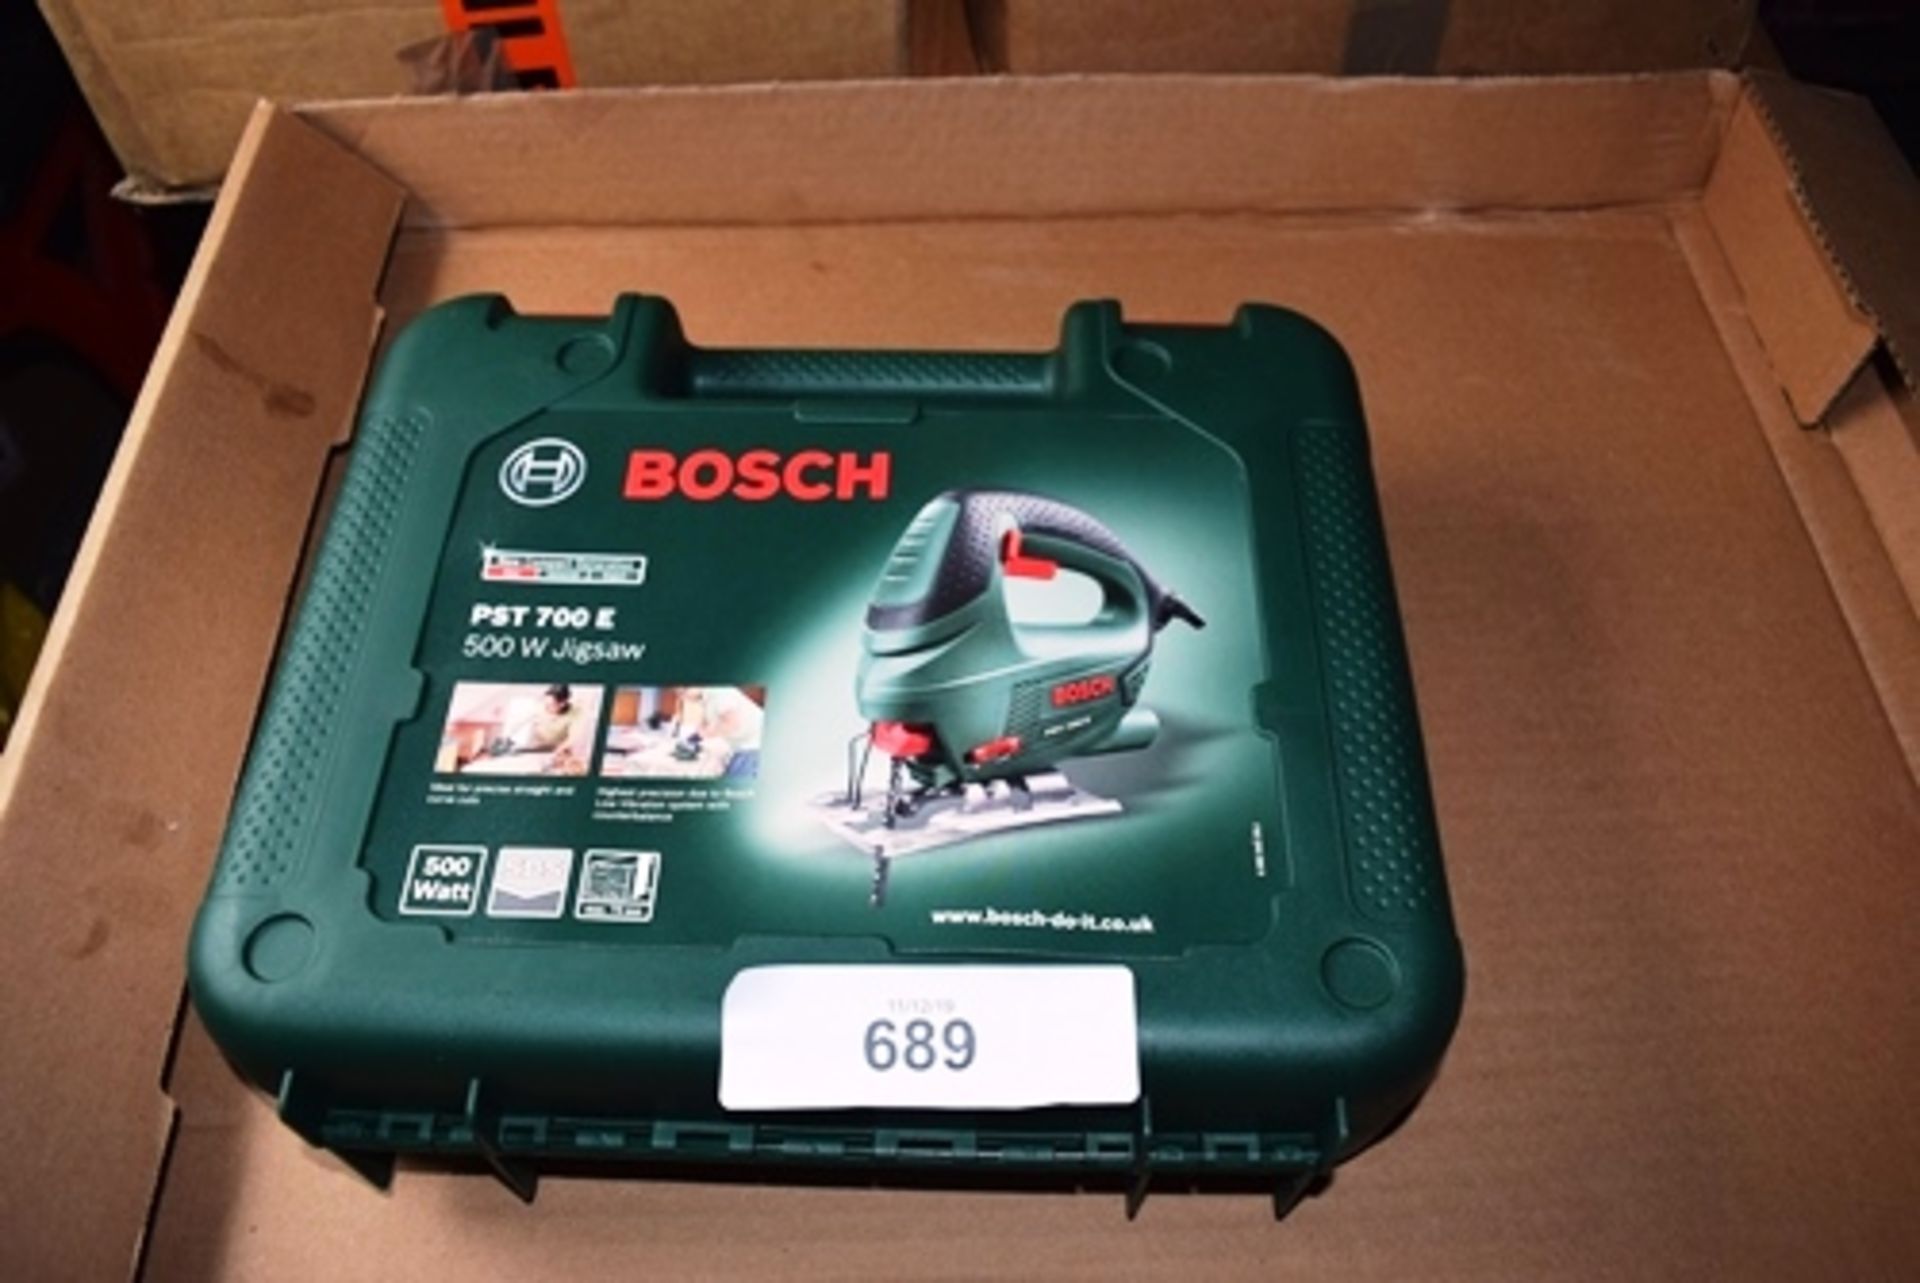 1 x Bosch PST700E compact jigsaw, 230V, code 06033A0070 - New in case (CB1)